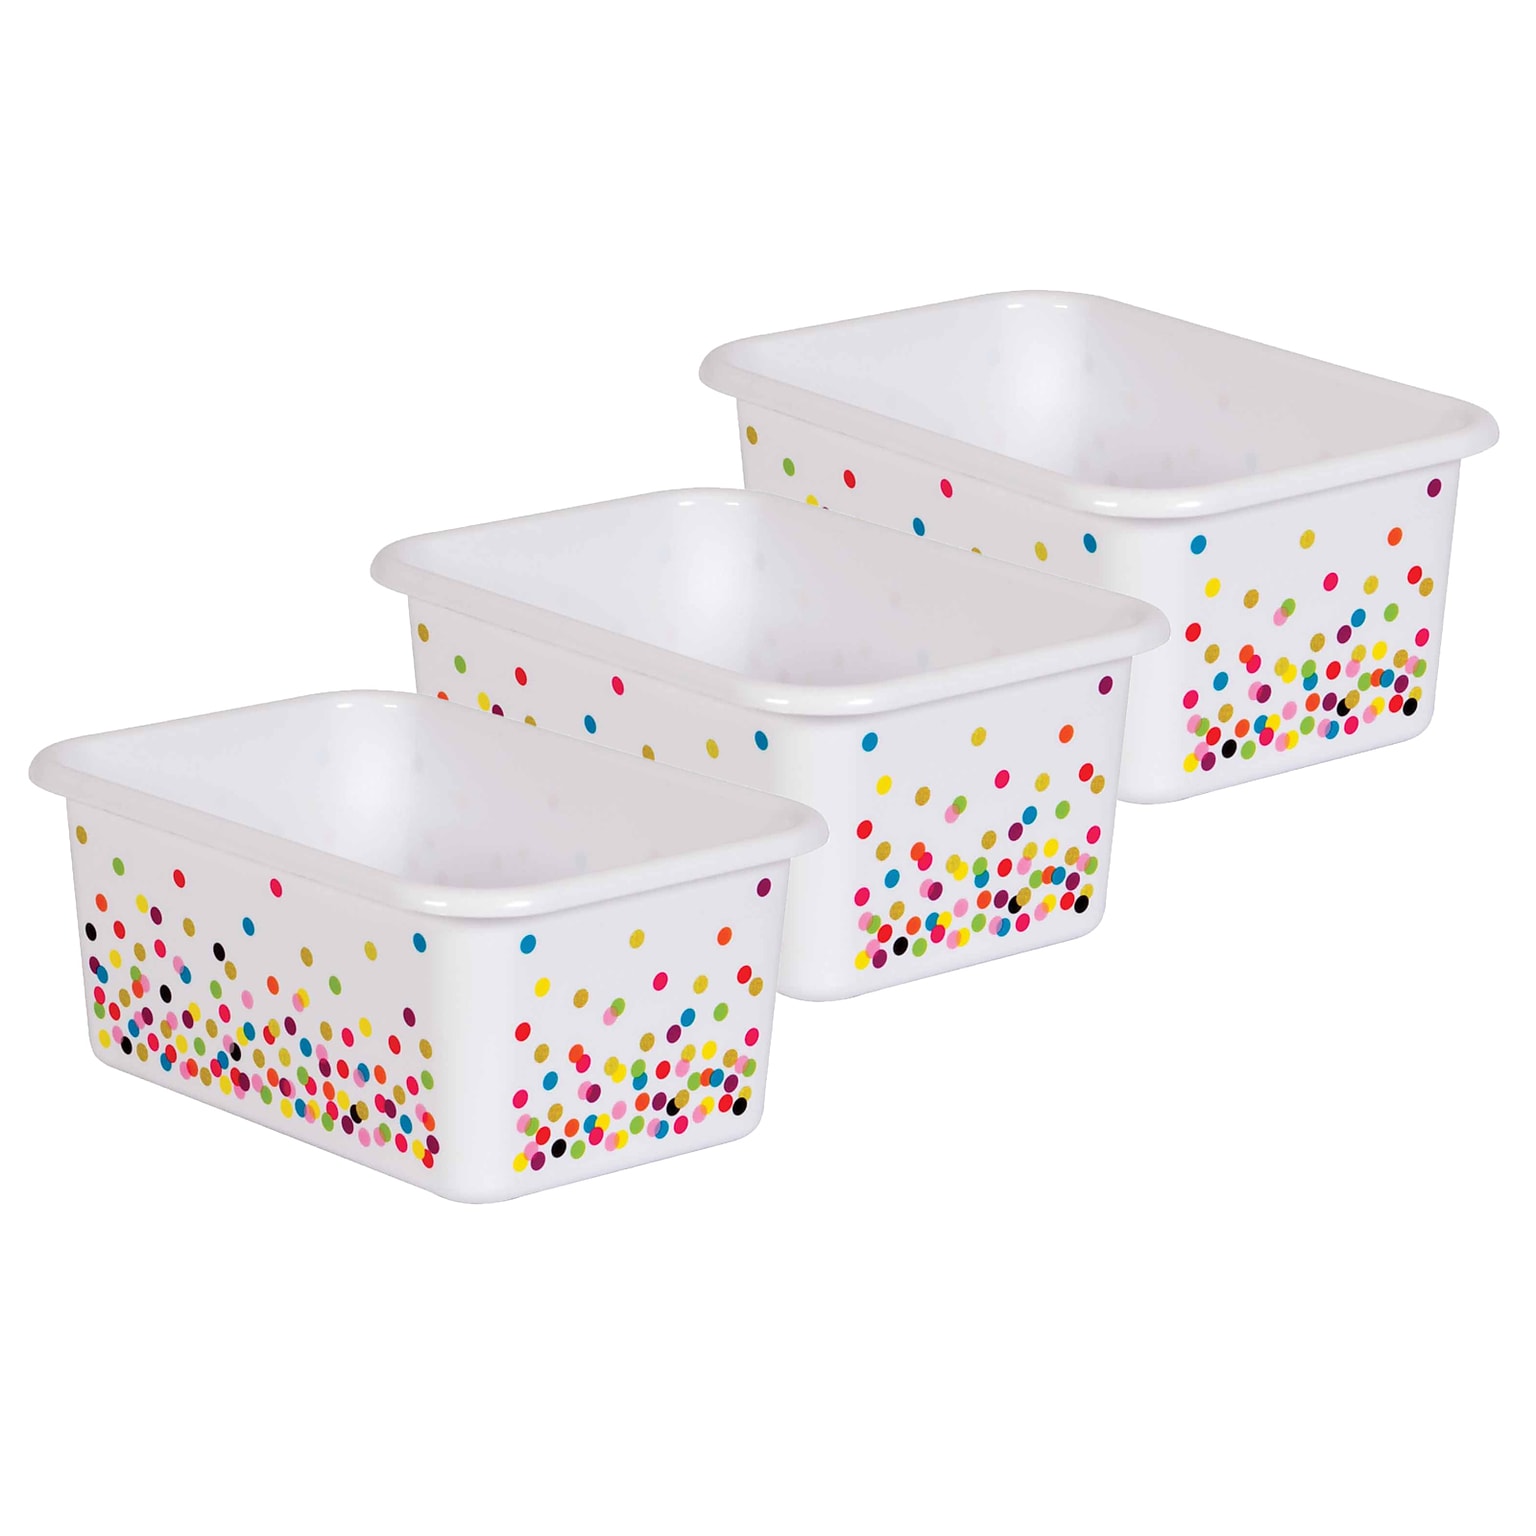 Teacher Created Resources Plastic Small Confetti Storage Bin, 7.75 x 11.38 x 5, Multicolored, Pack of 3 (TCR20888-3)